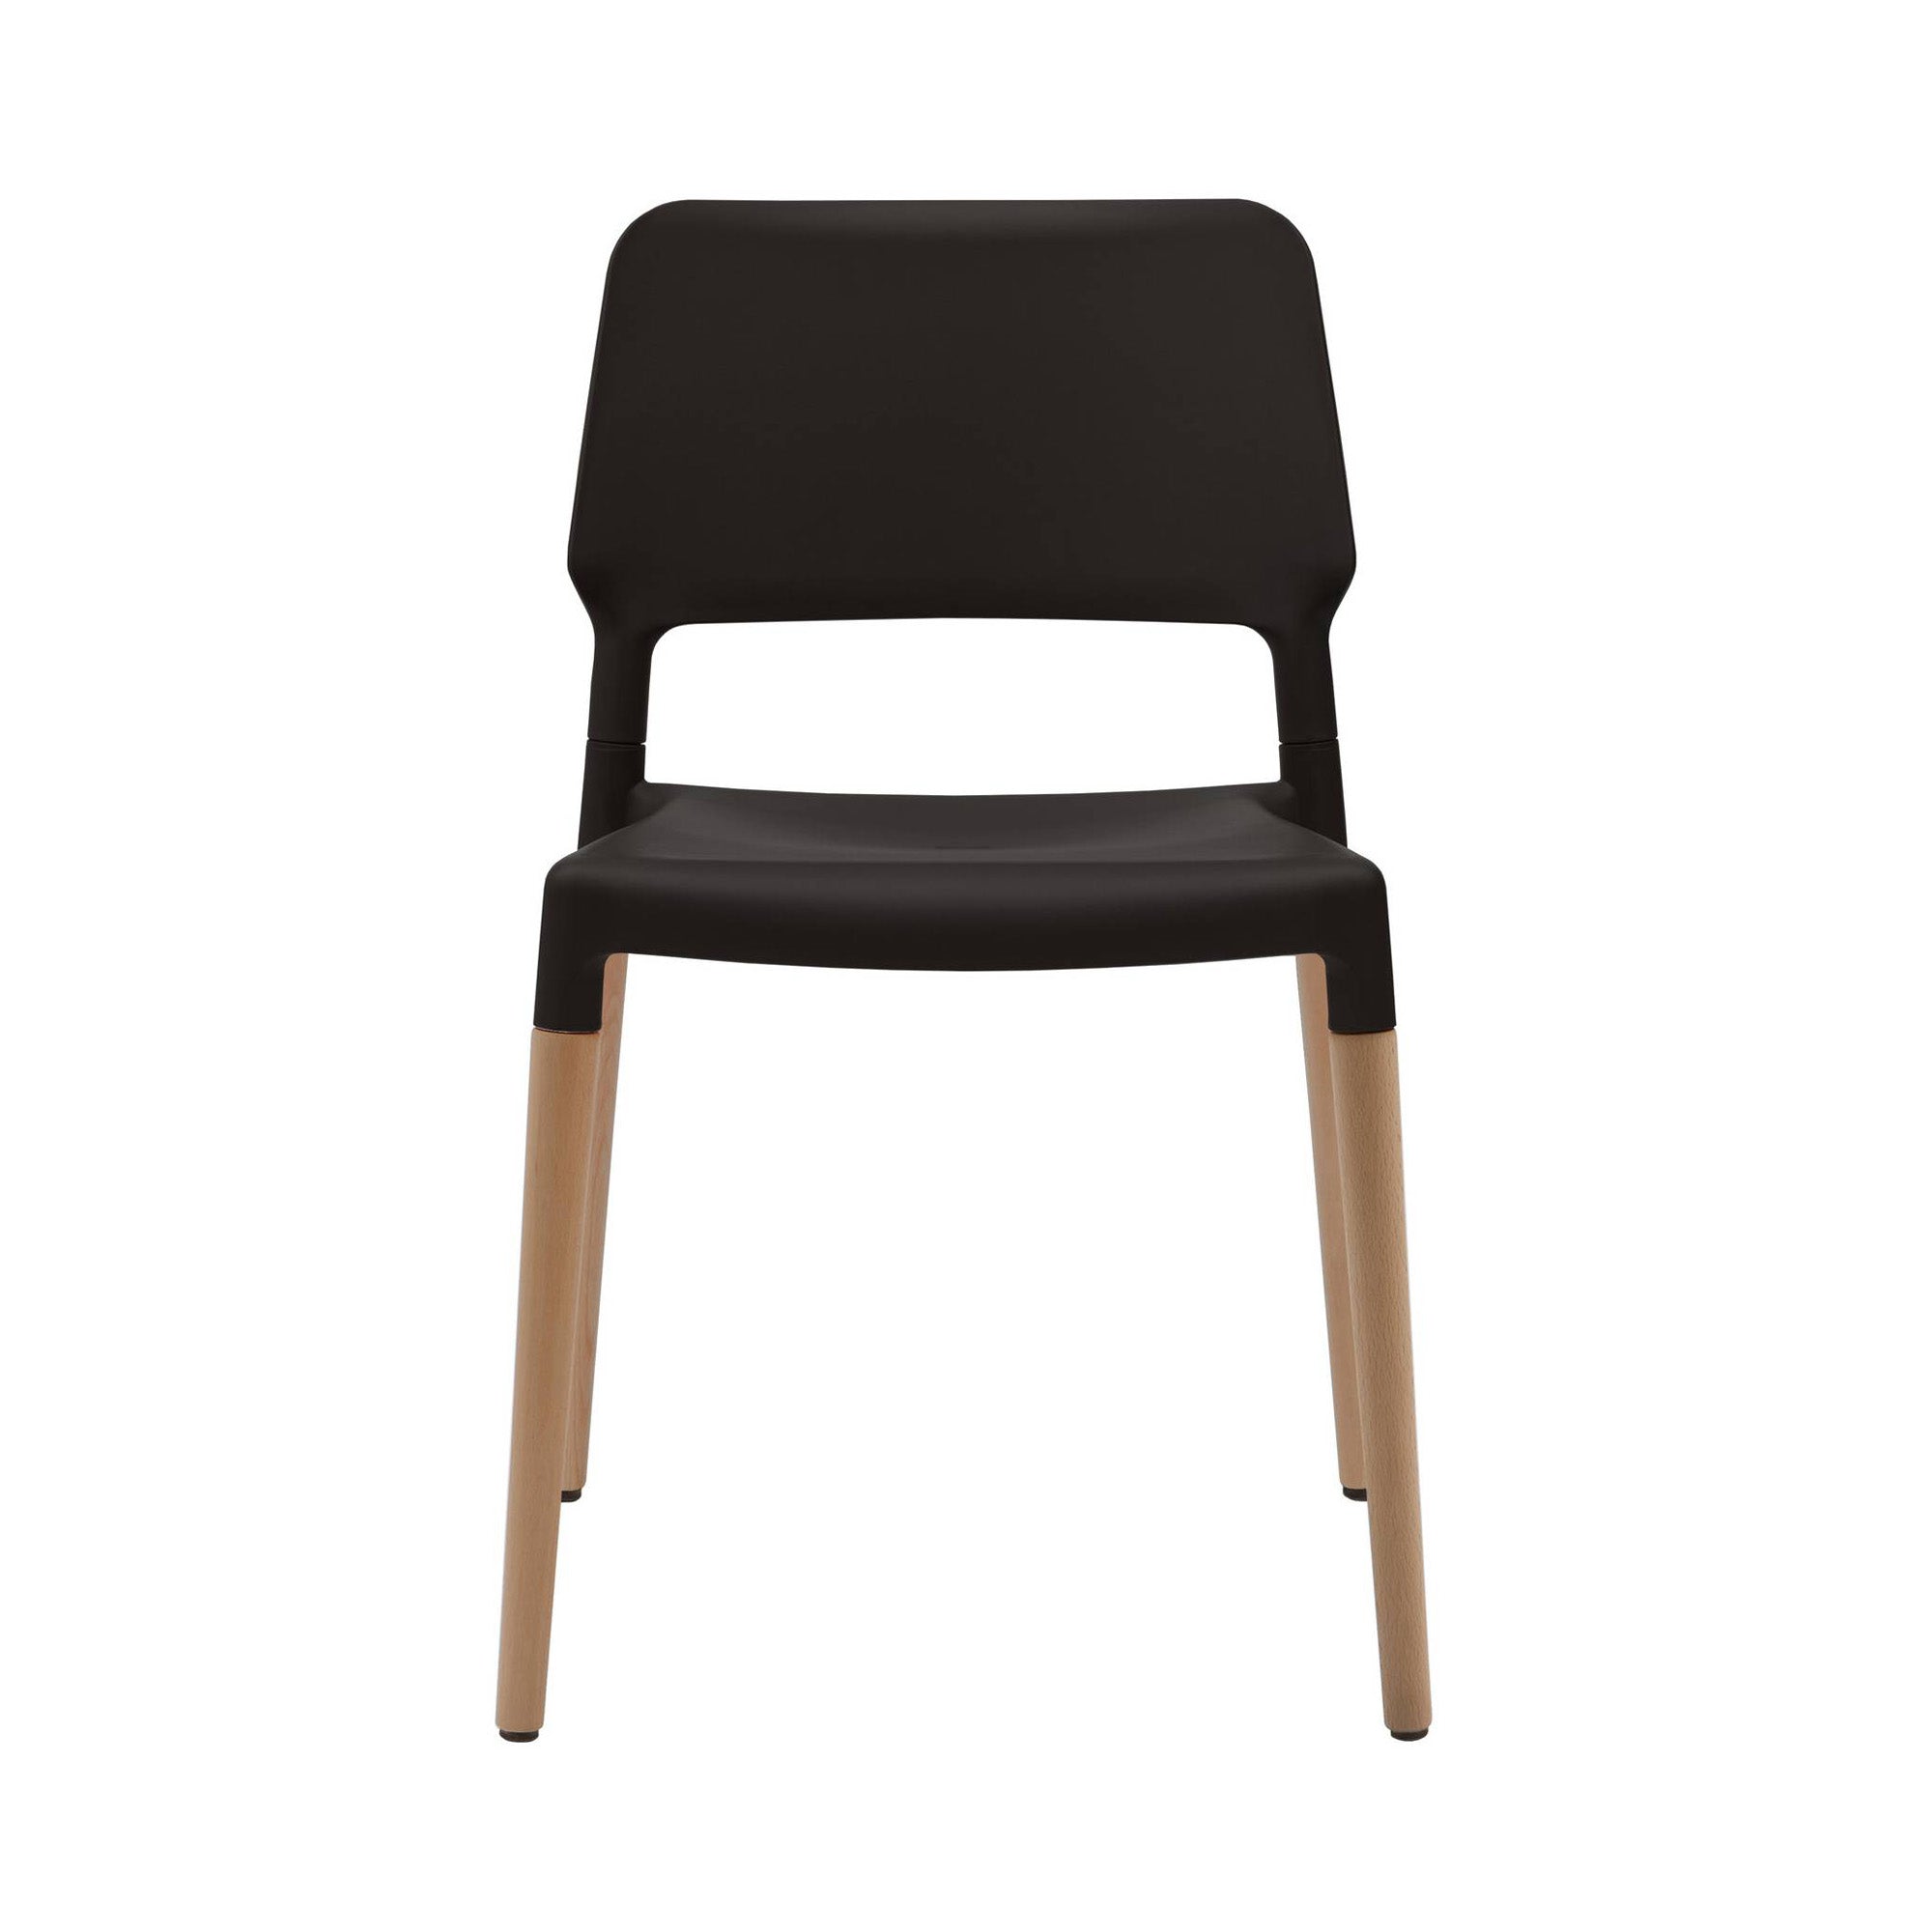 Belloch Chair: Black